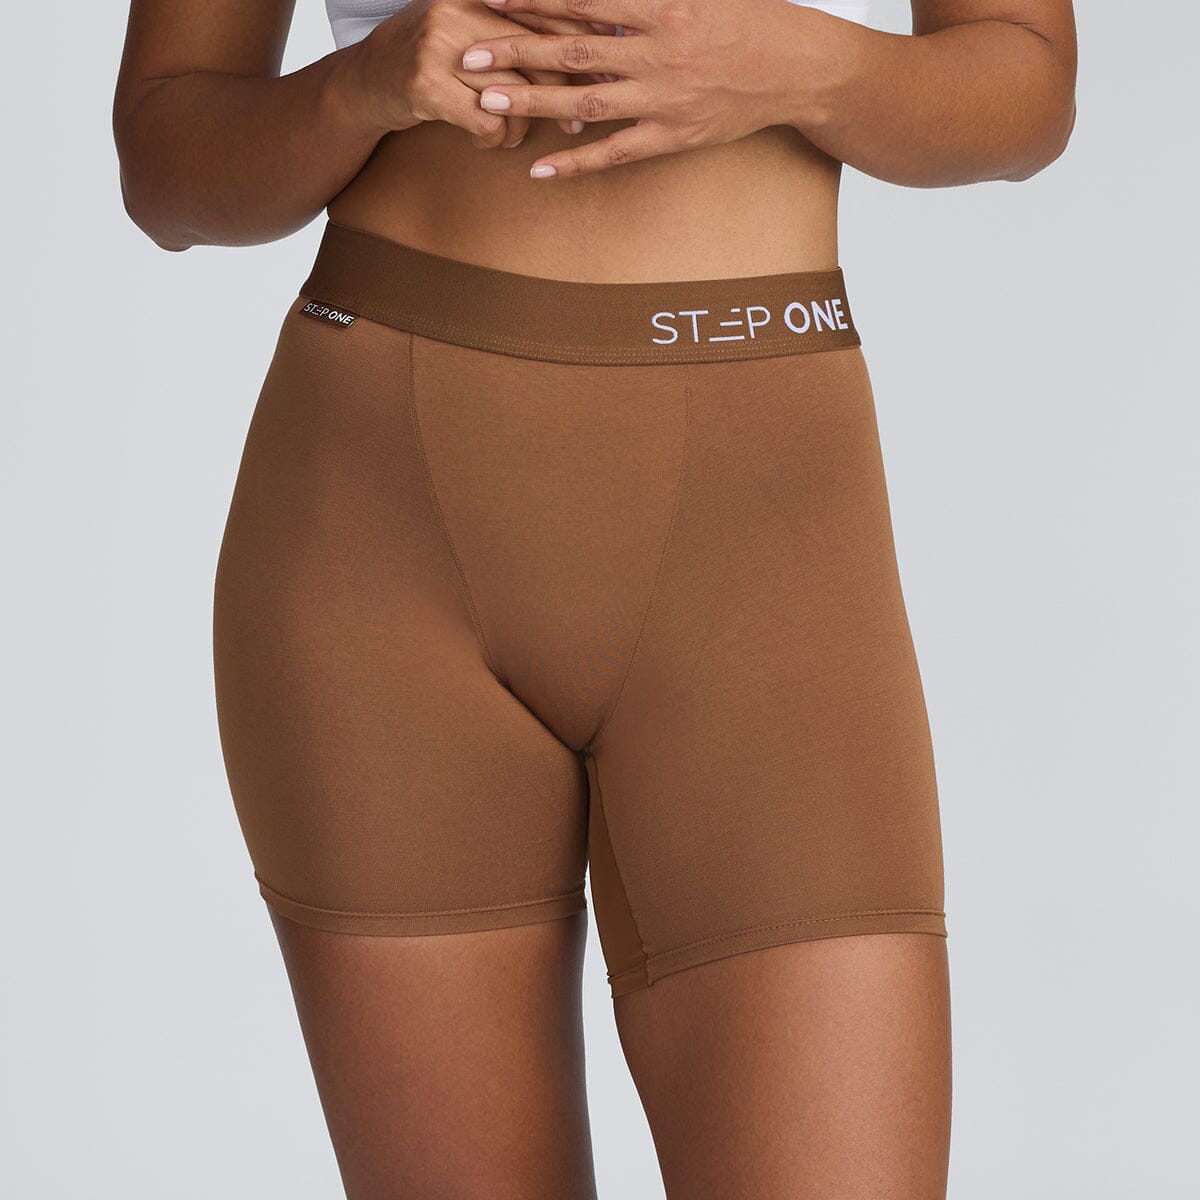 Brown Bamboo Women's Underwear UK